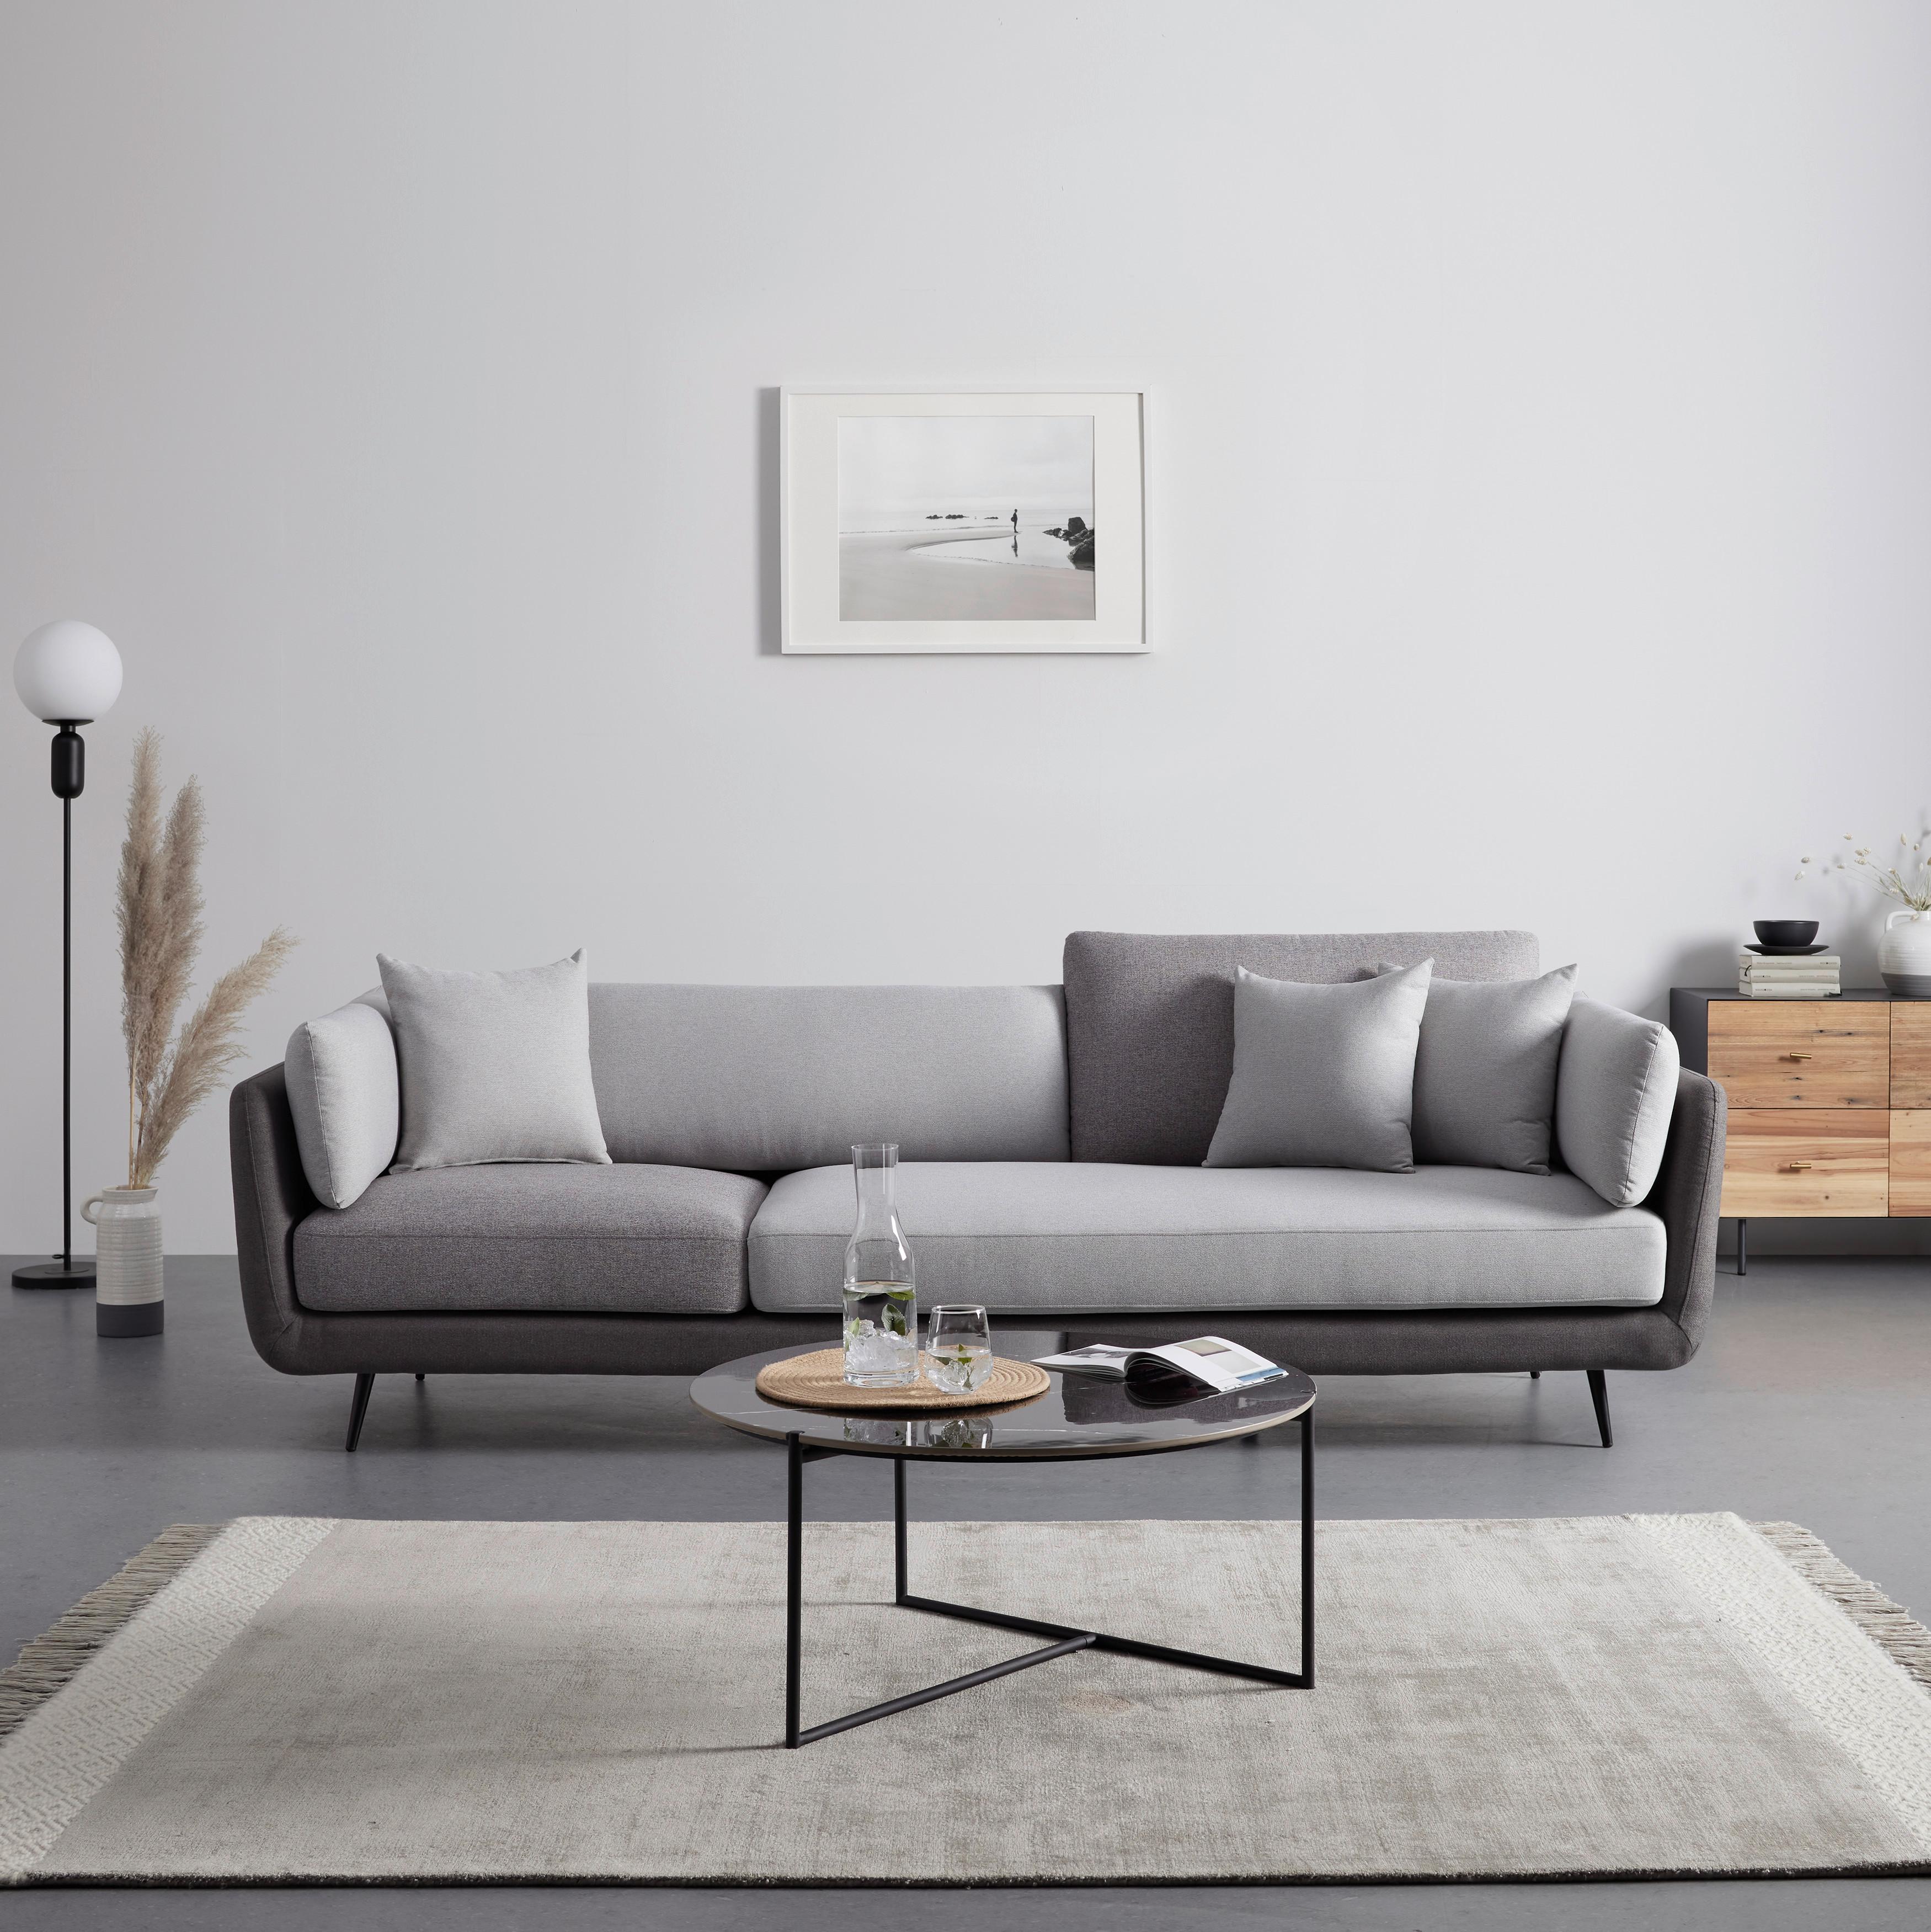 Sofa "Genesis", dreisitzer, grau - Schwarz/Grau, MODERN, Holz/Textil (261/65/91cm) - Bessagi Home